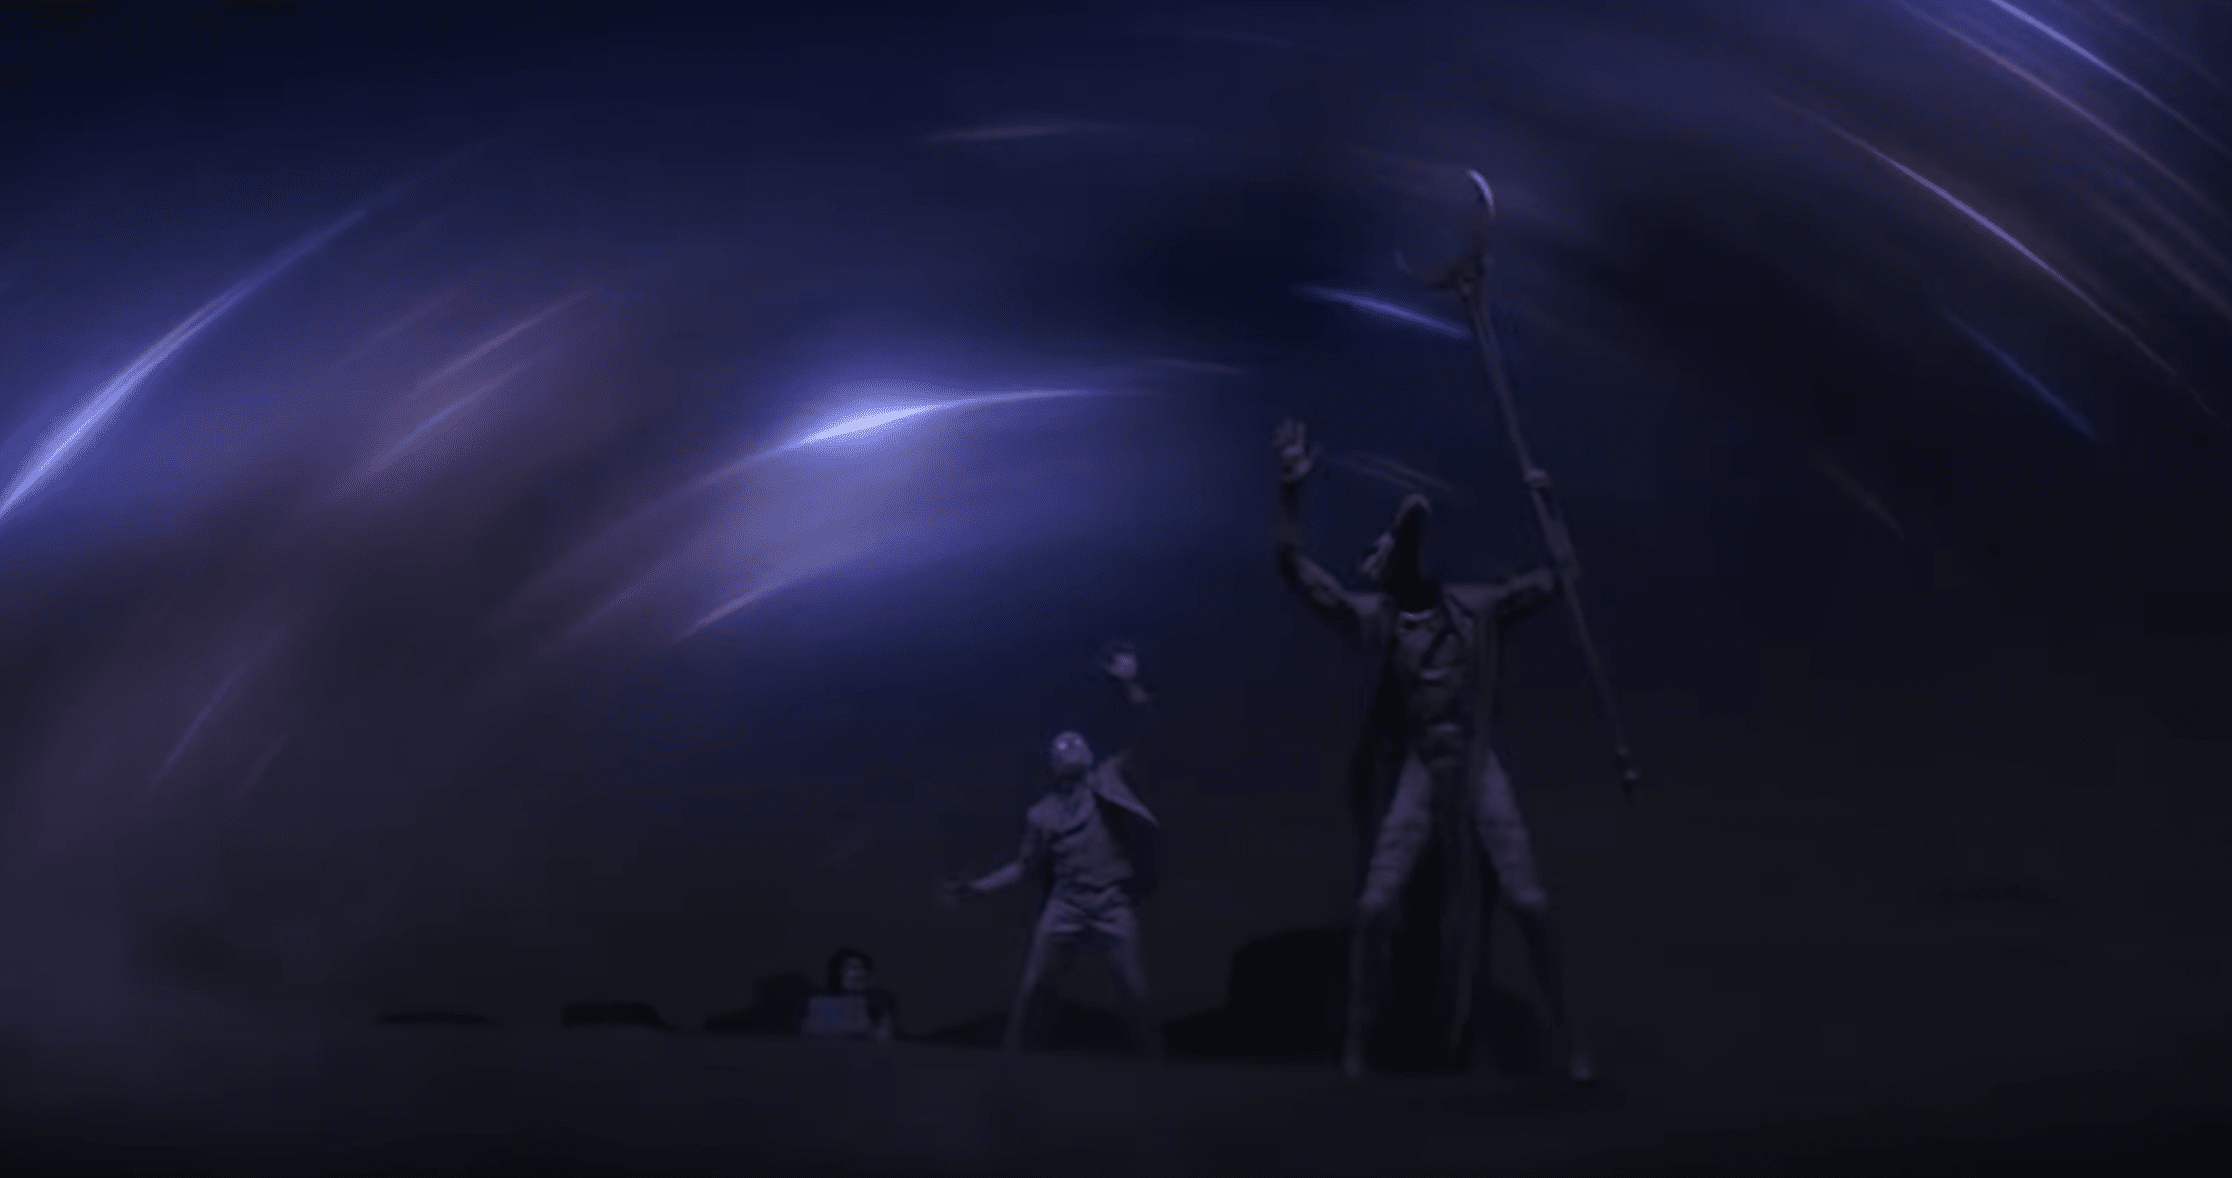 Moon Knight Episode 3 night sky coordinates